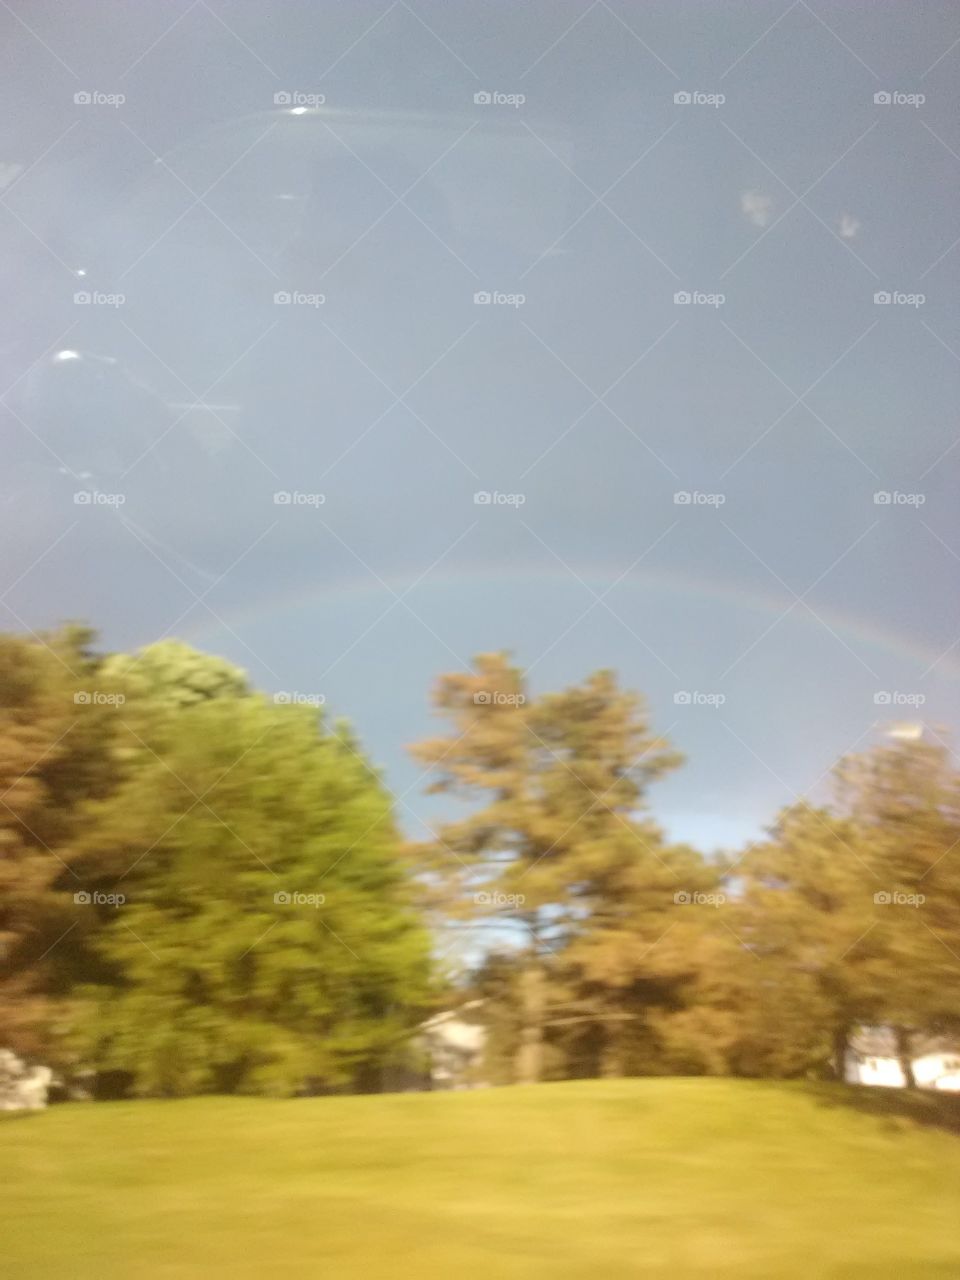 beautiful rainbow on wonderfully rainy day 🌞